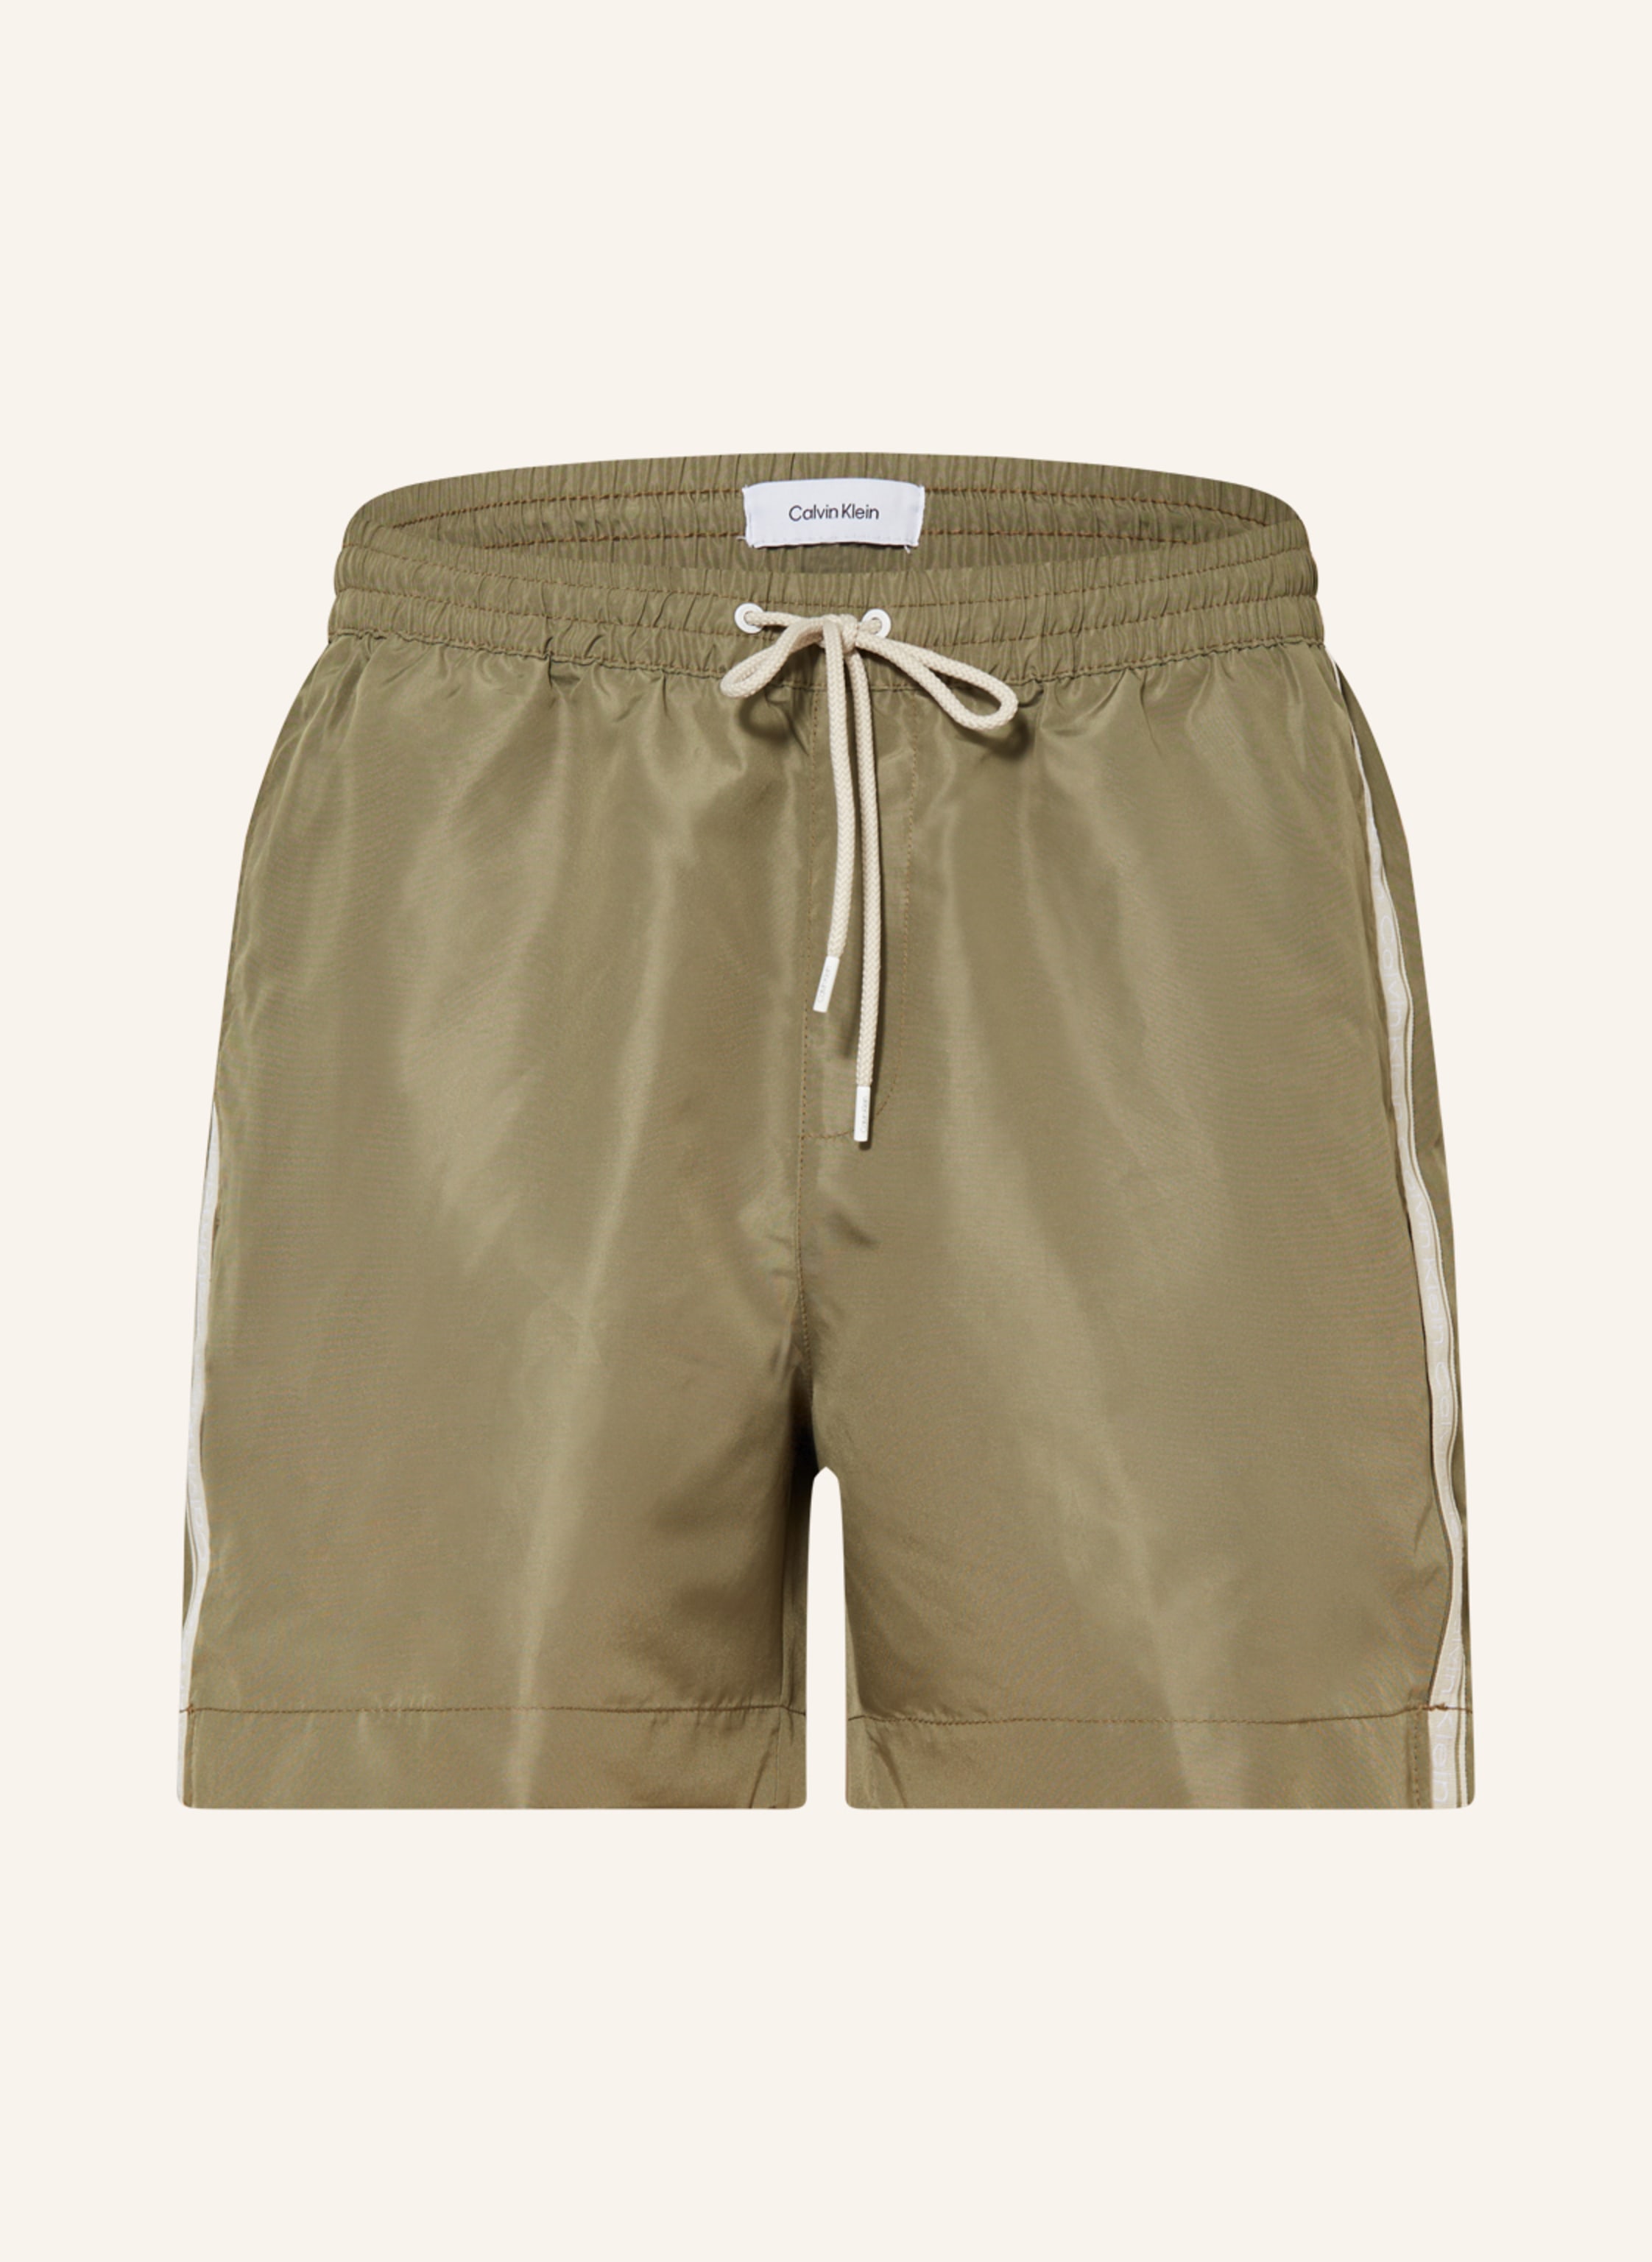 Calvin Klein Swim shorts logo TAPE in khaki | Breuninger